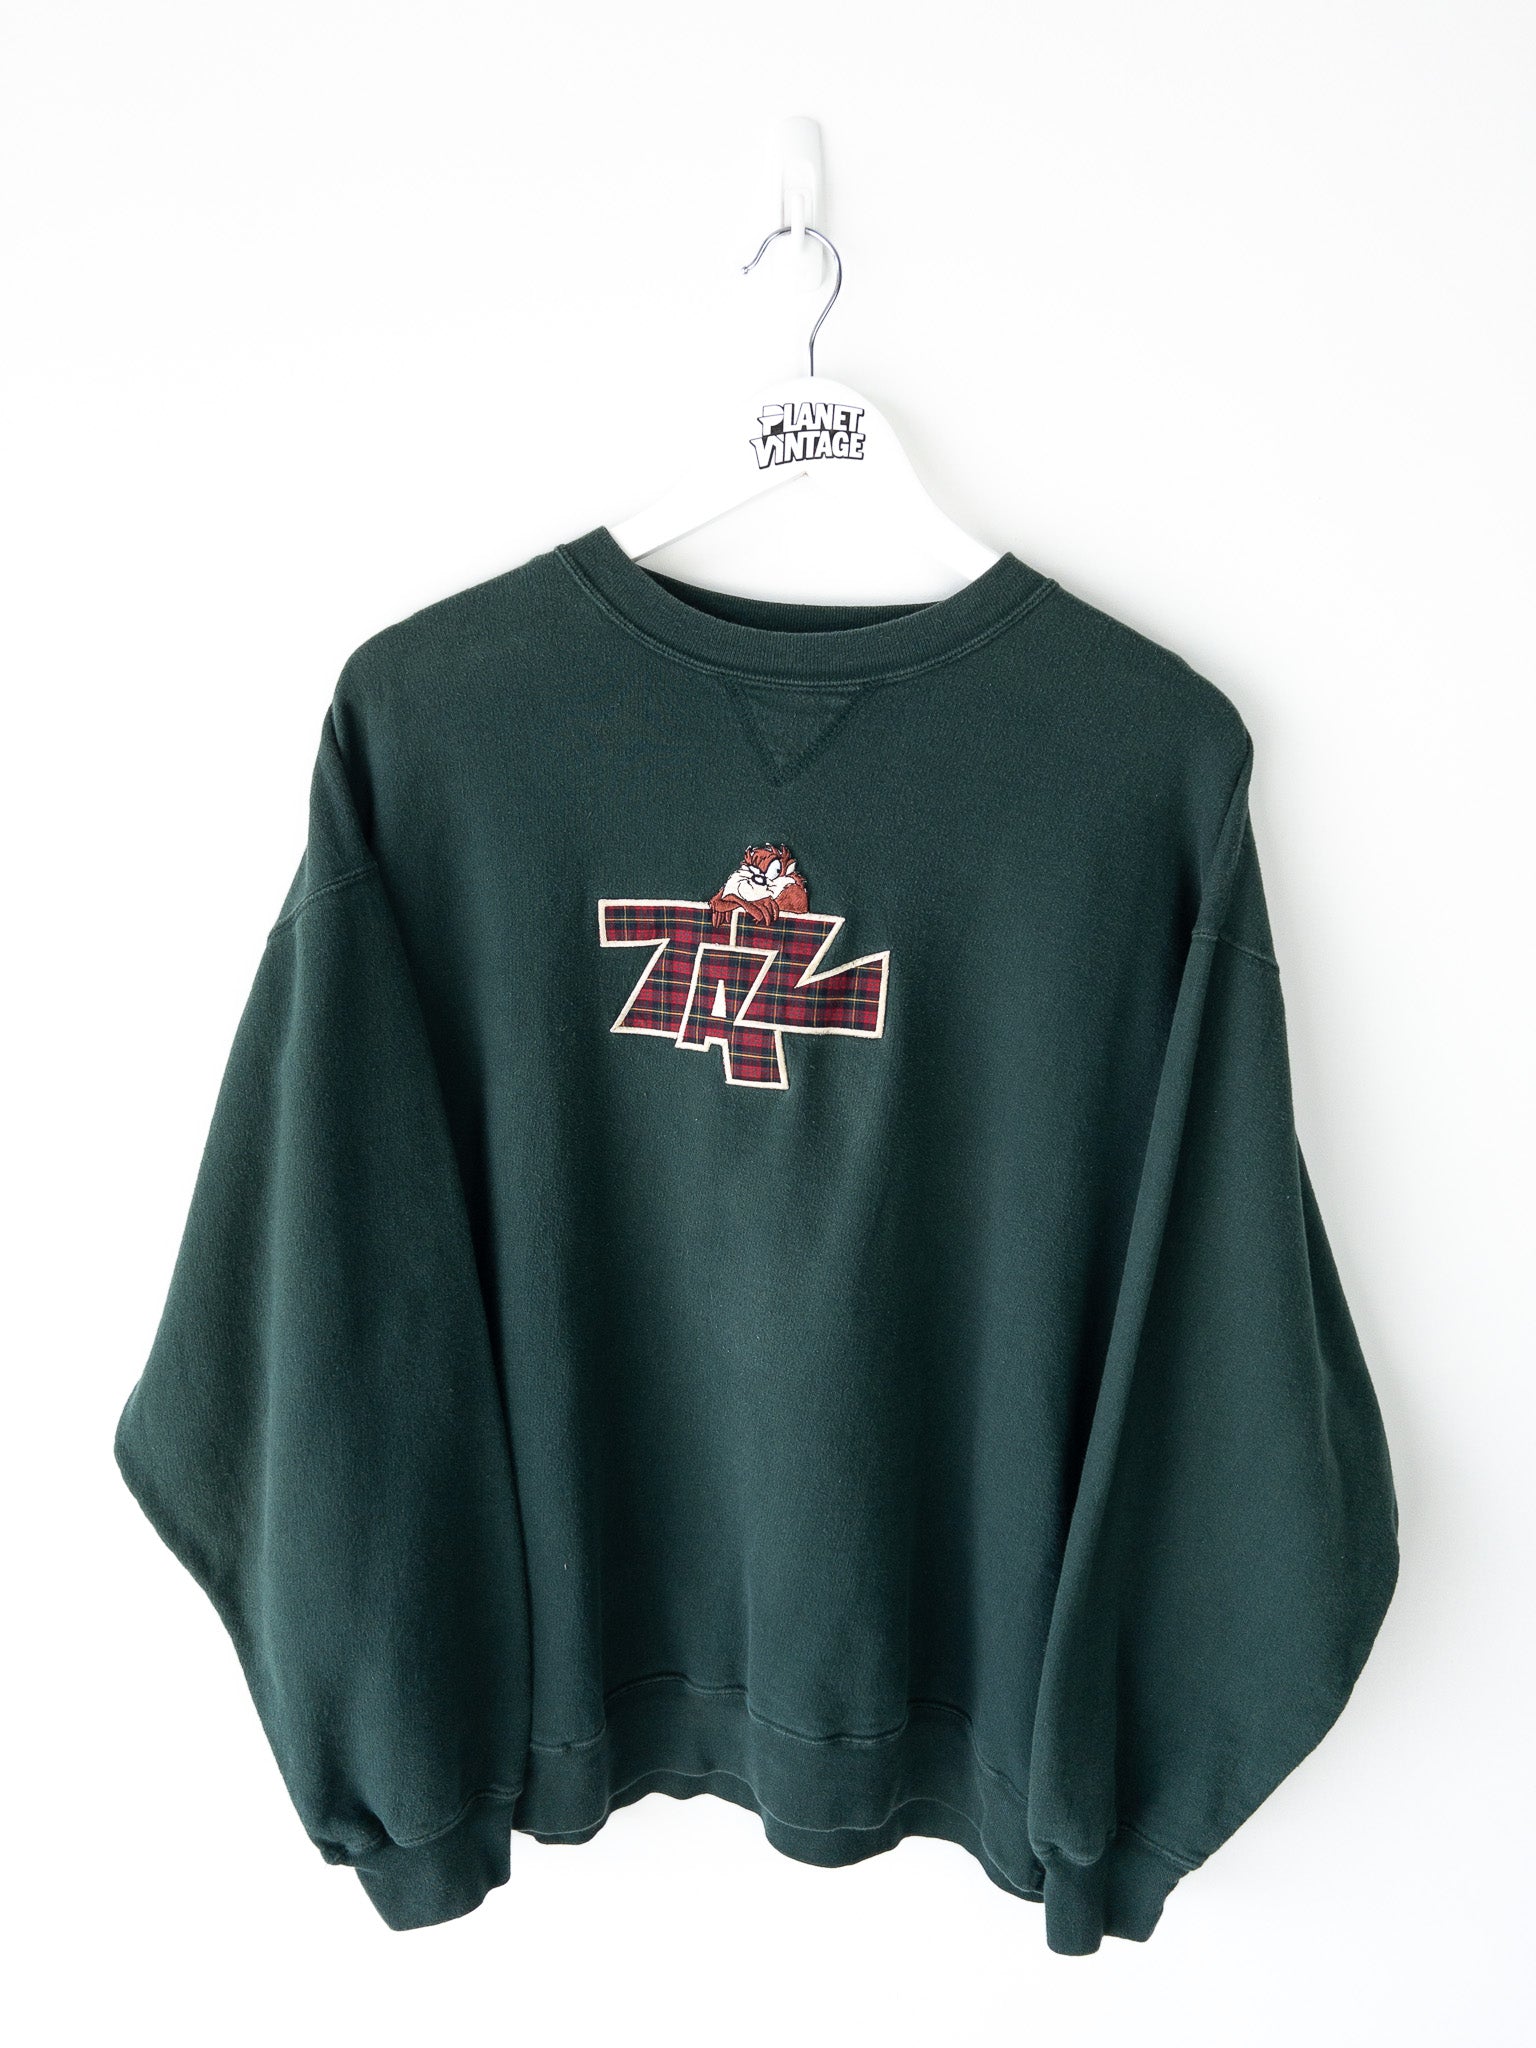 Vintage Taz Sweatshirt (XL)